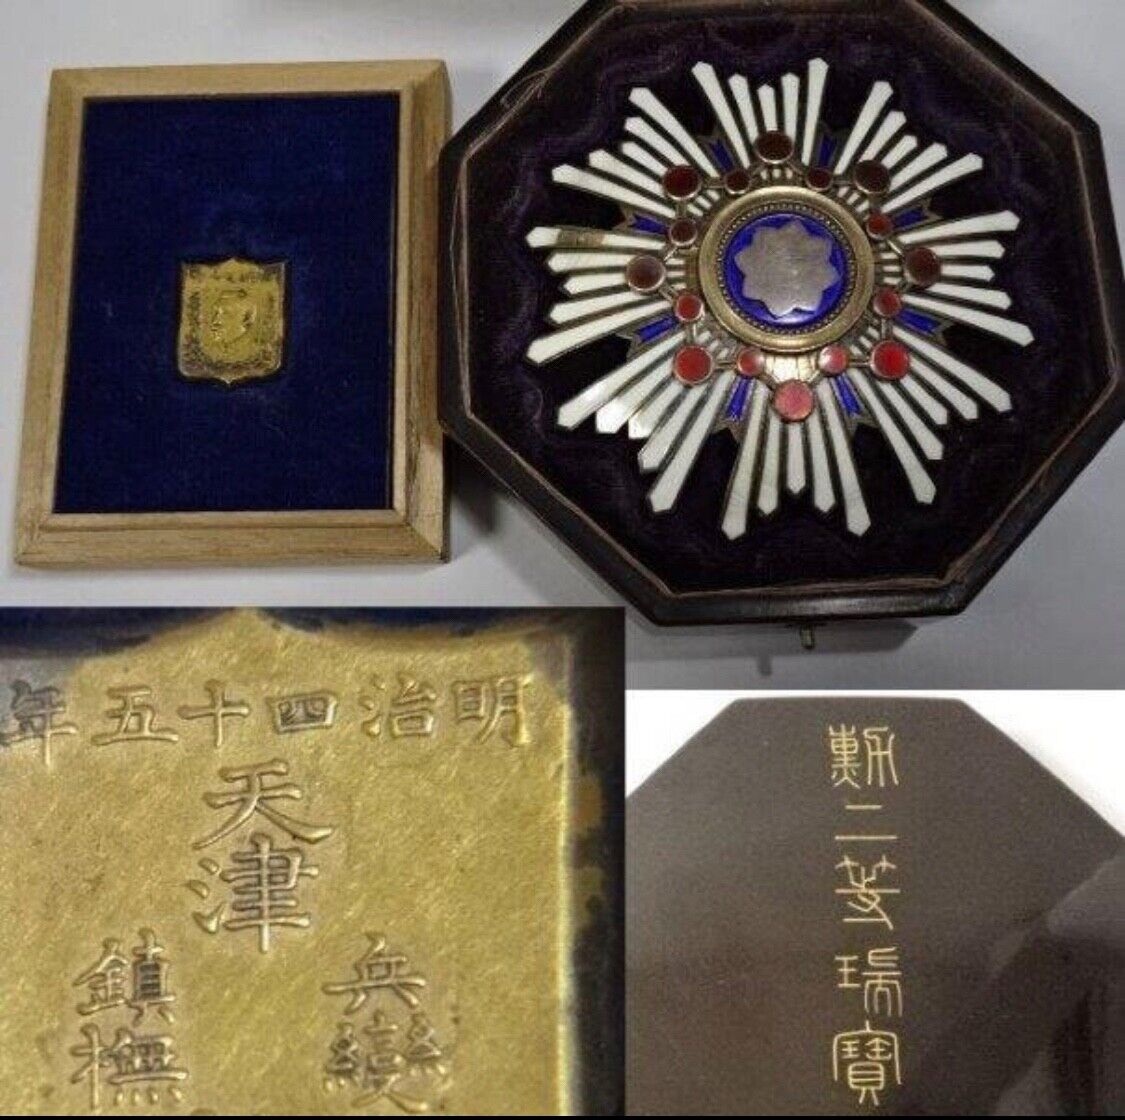 Worldwar2 original imperial japanese class2 order of the sacred treasure set